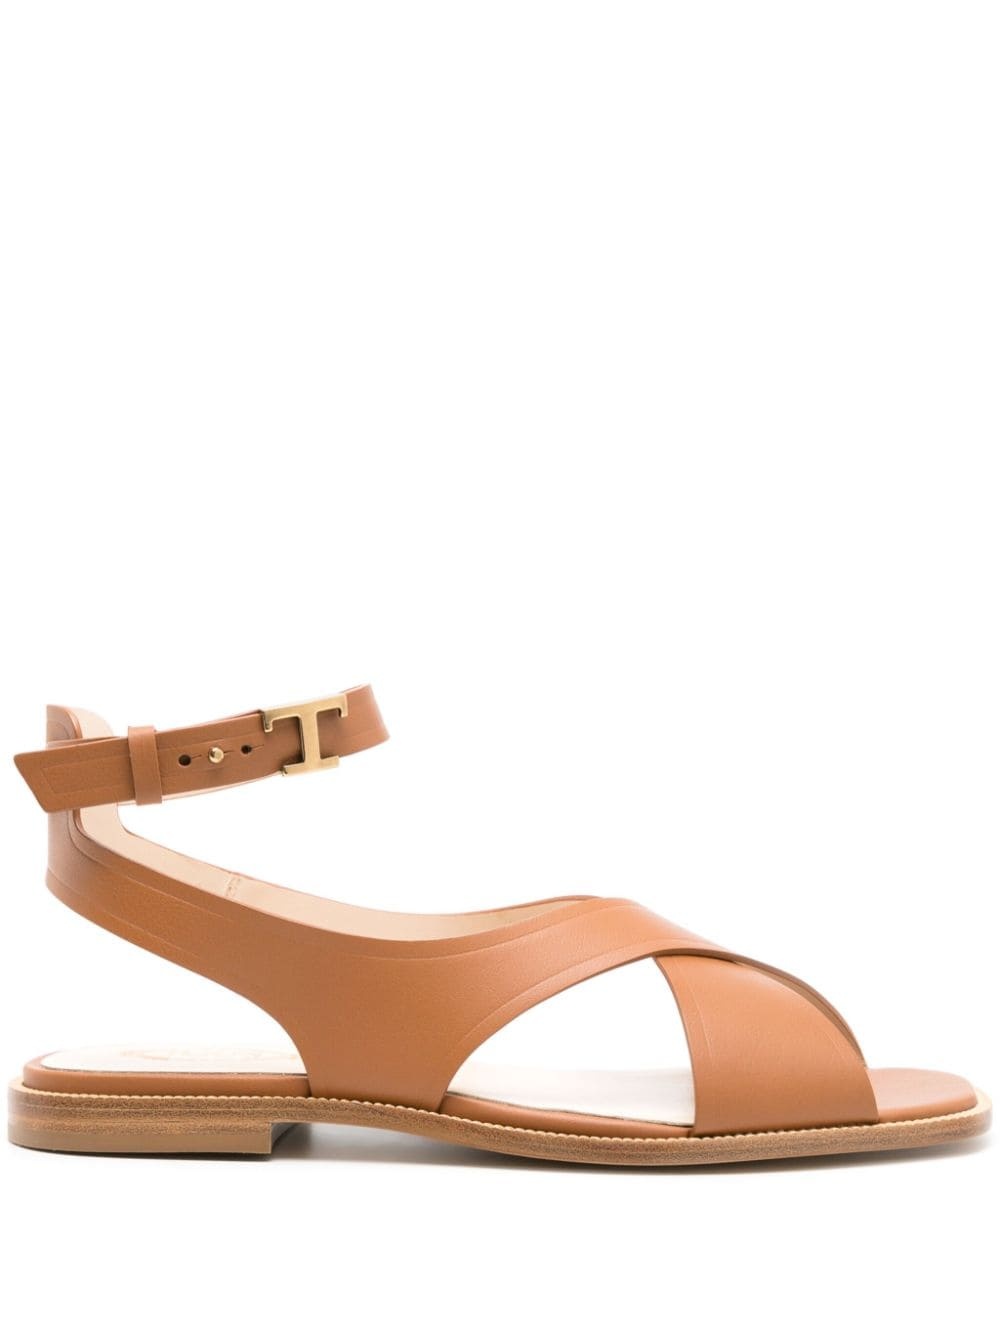 Kenia leather sandals - 1